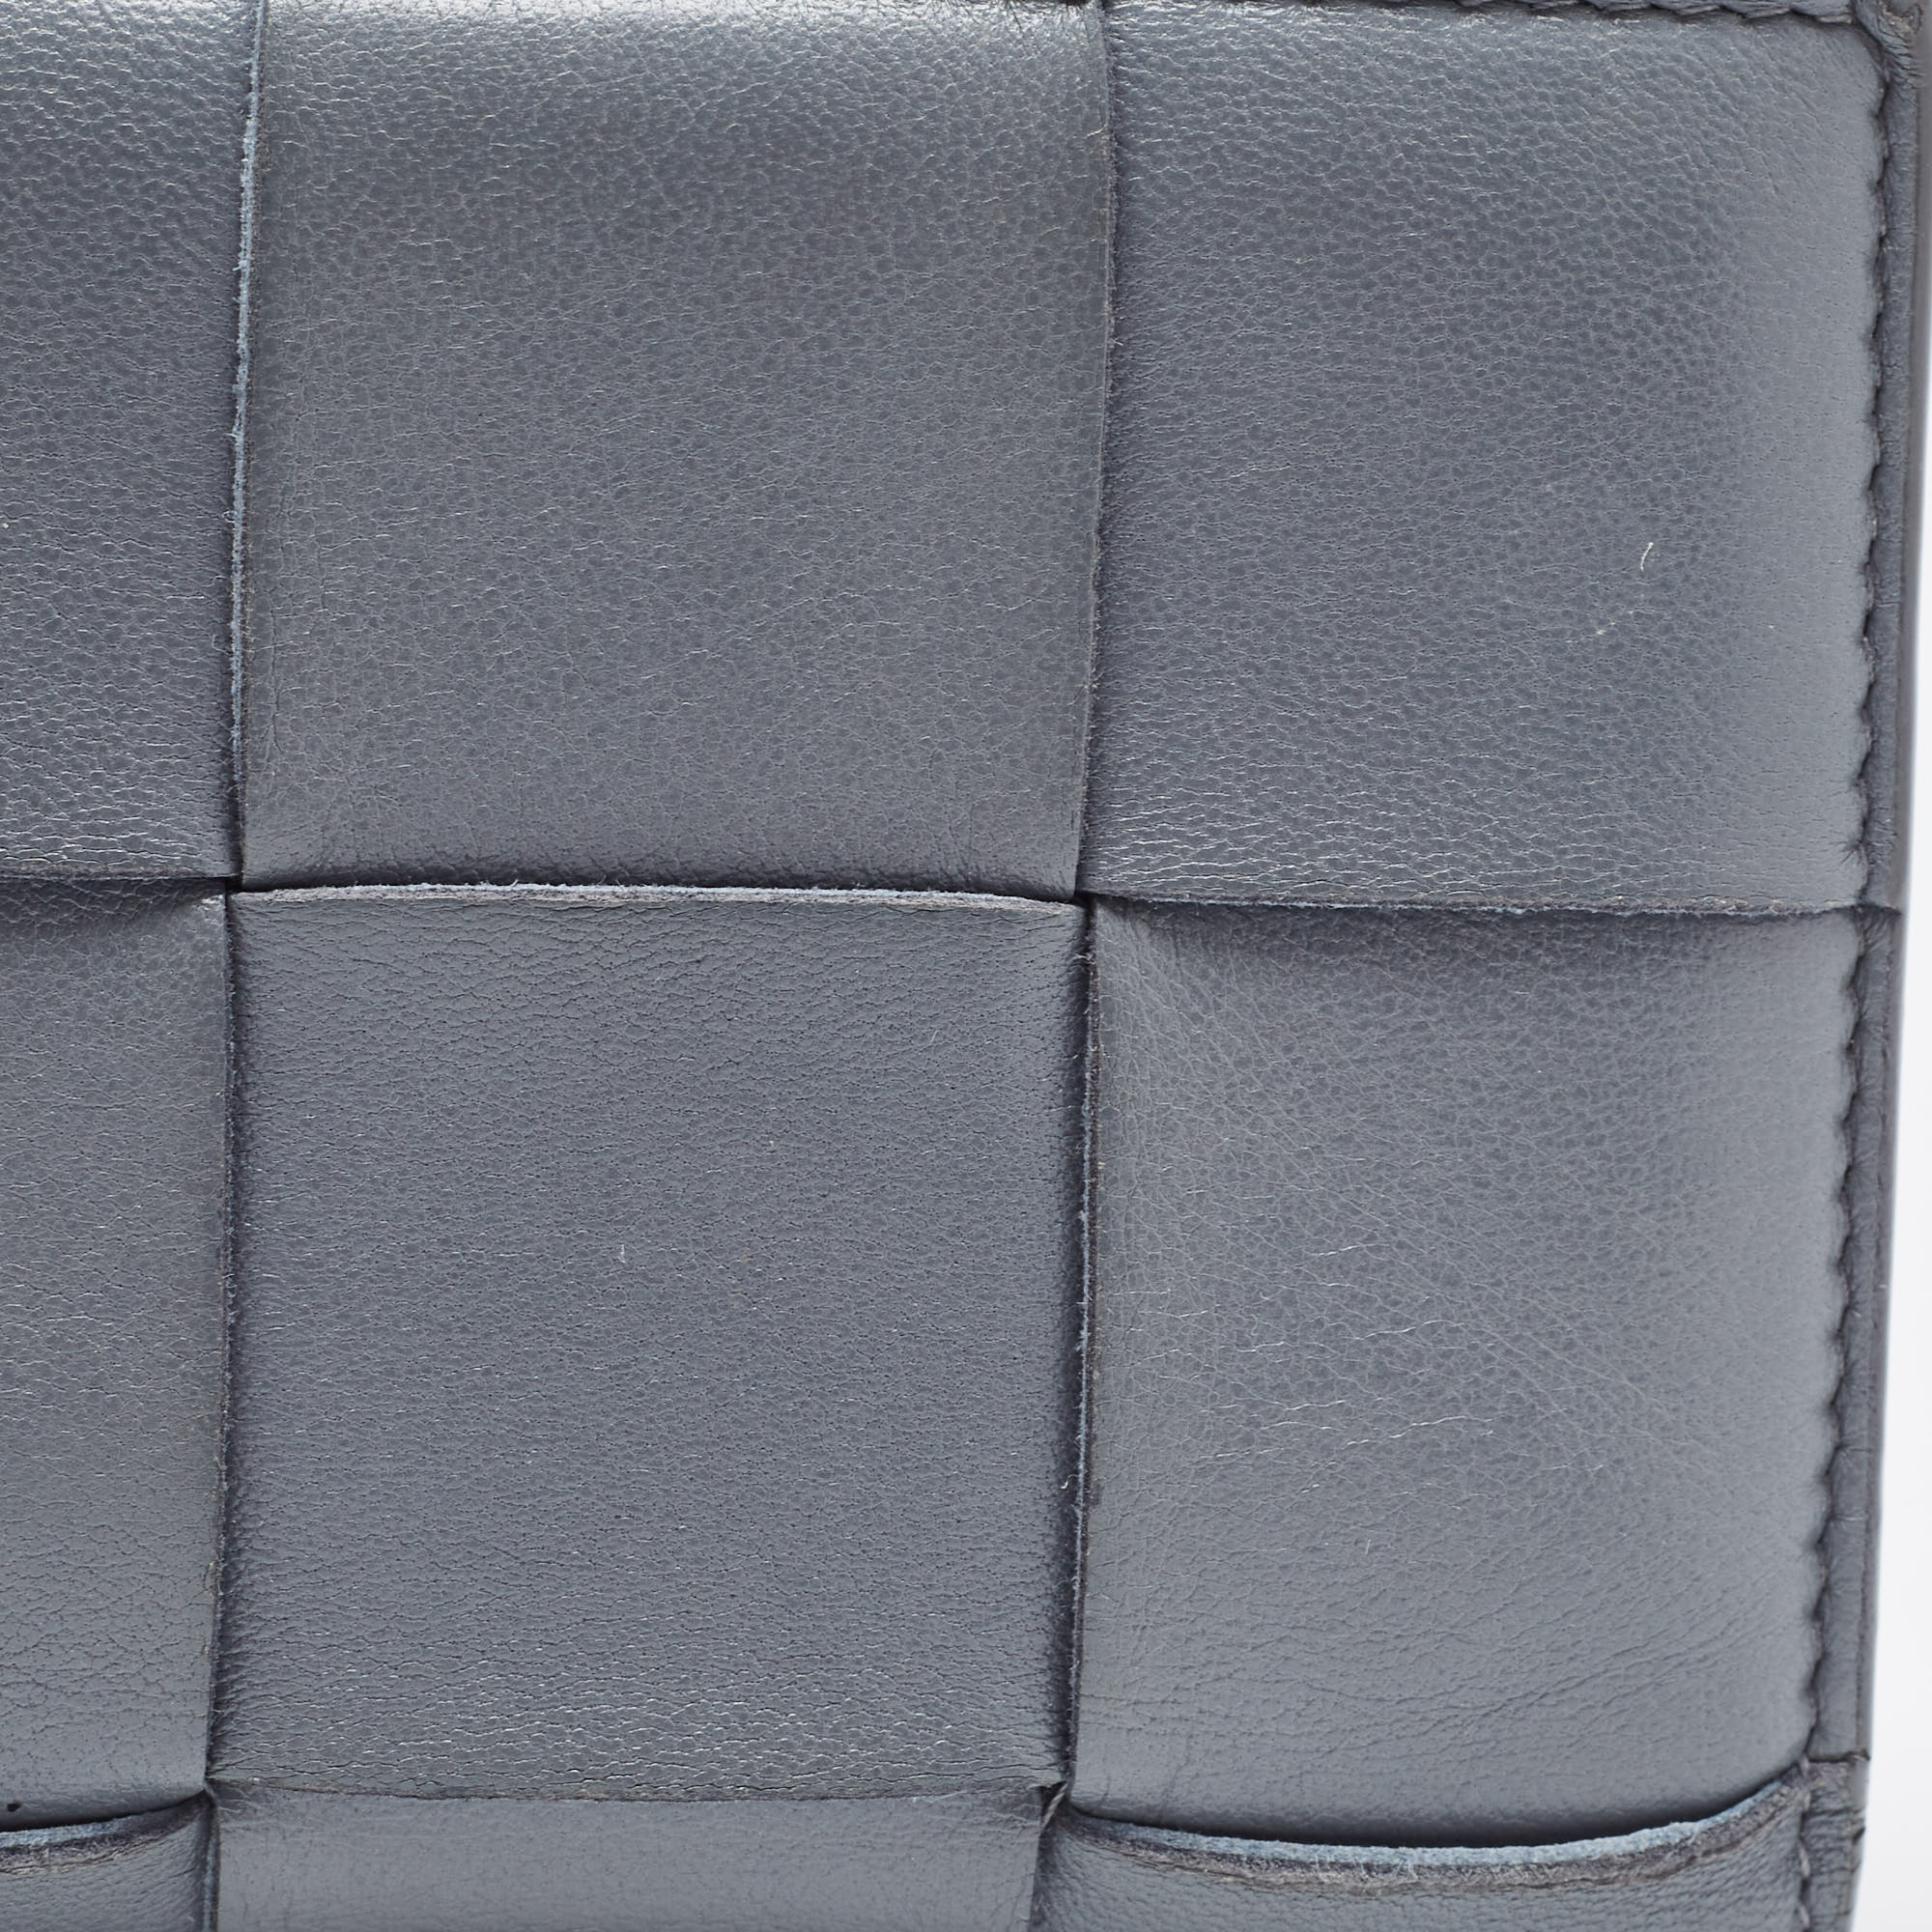 Bottega Veneta Grey Intrecciato Leather Bifold Zip Wallet